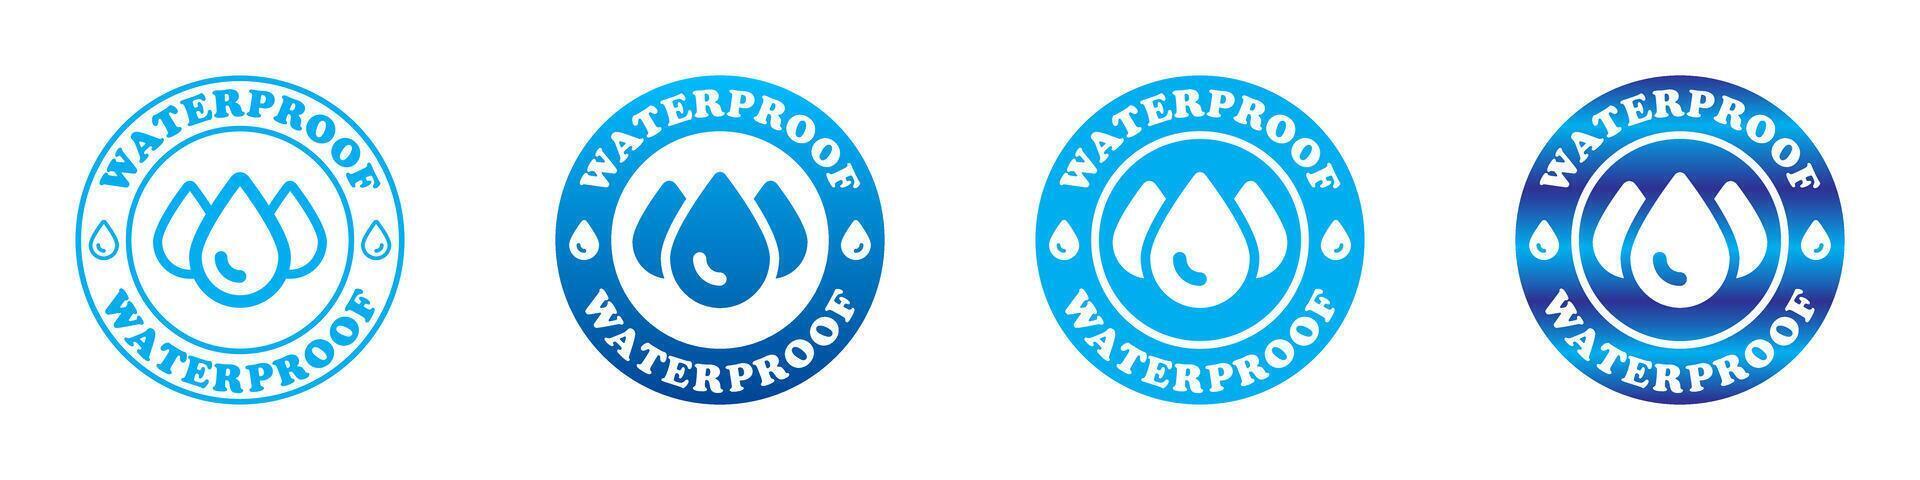 Waterproof icon set. Water proof logo. Vector illustration.